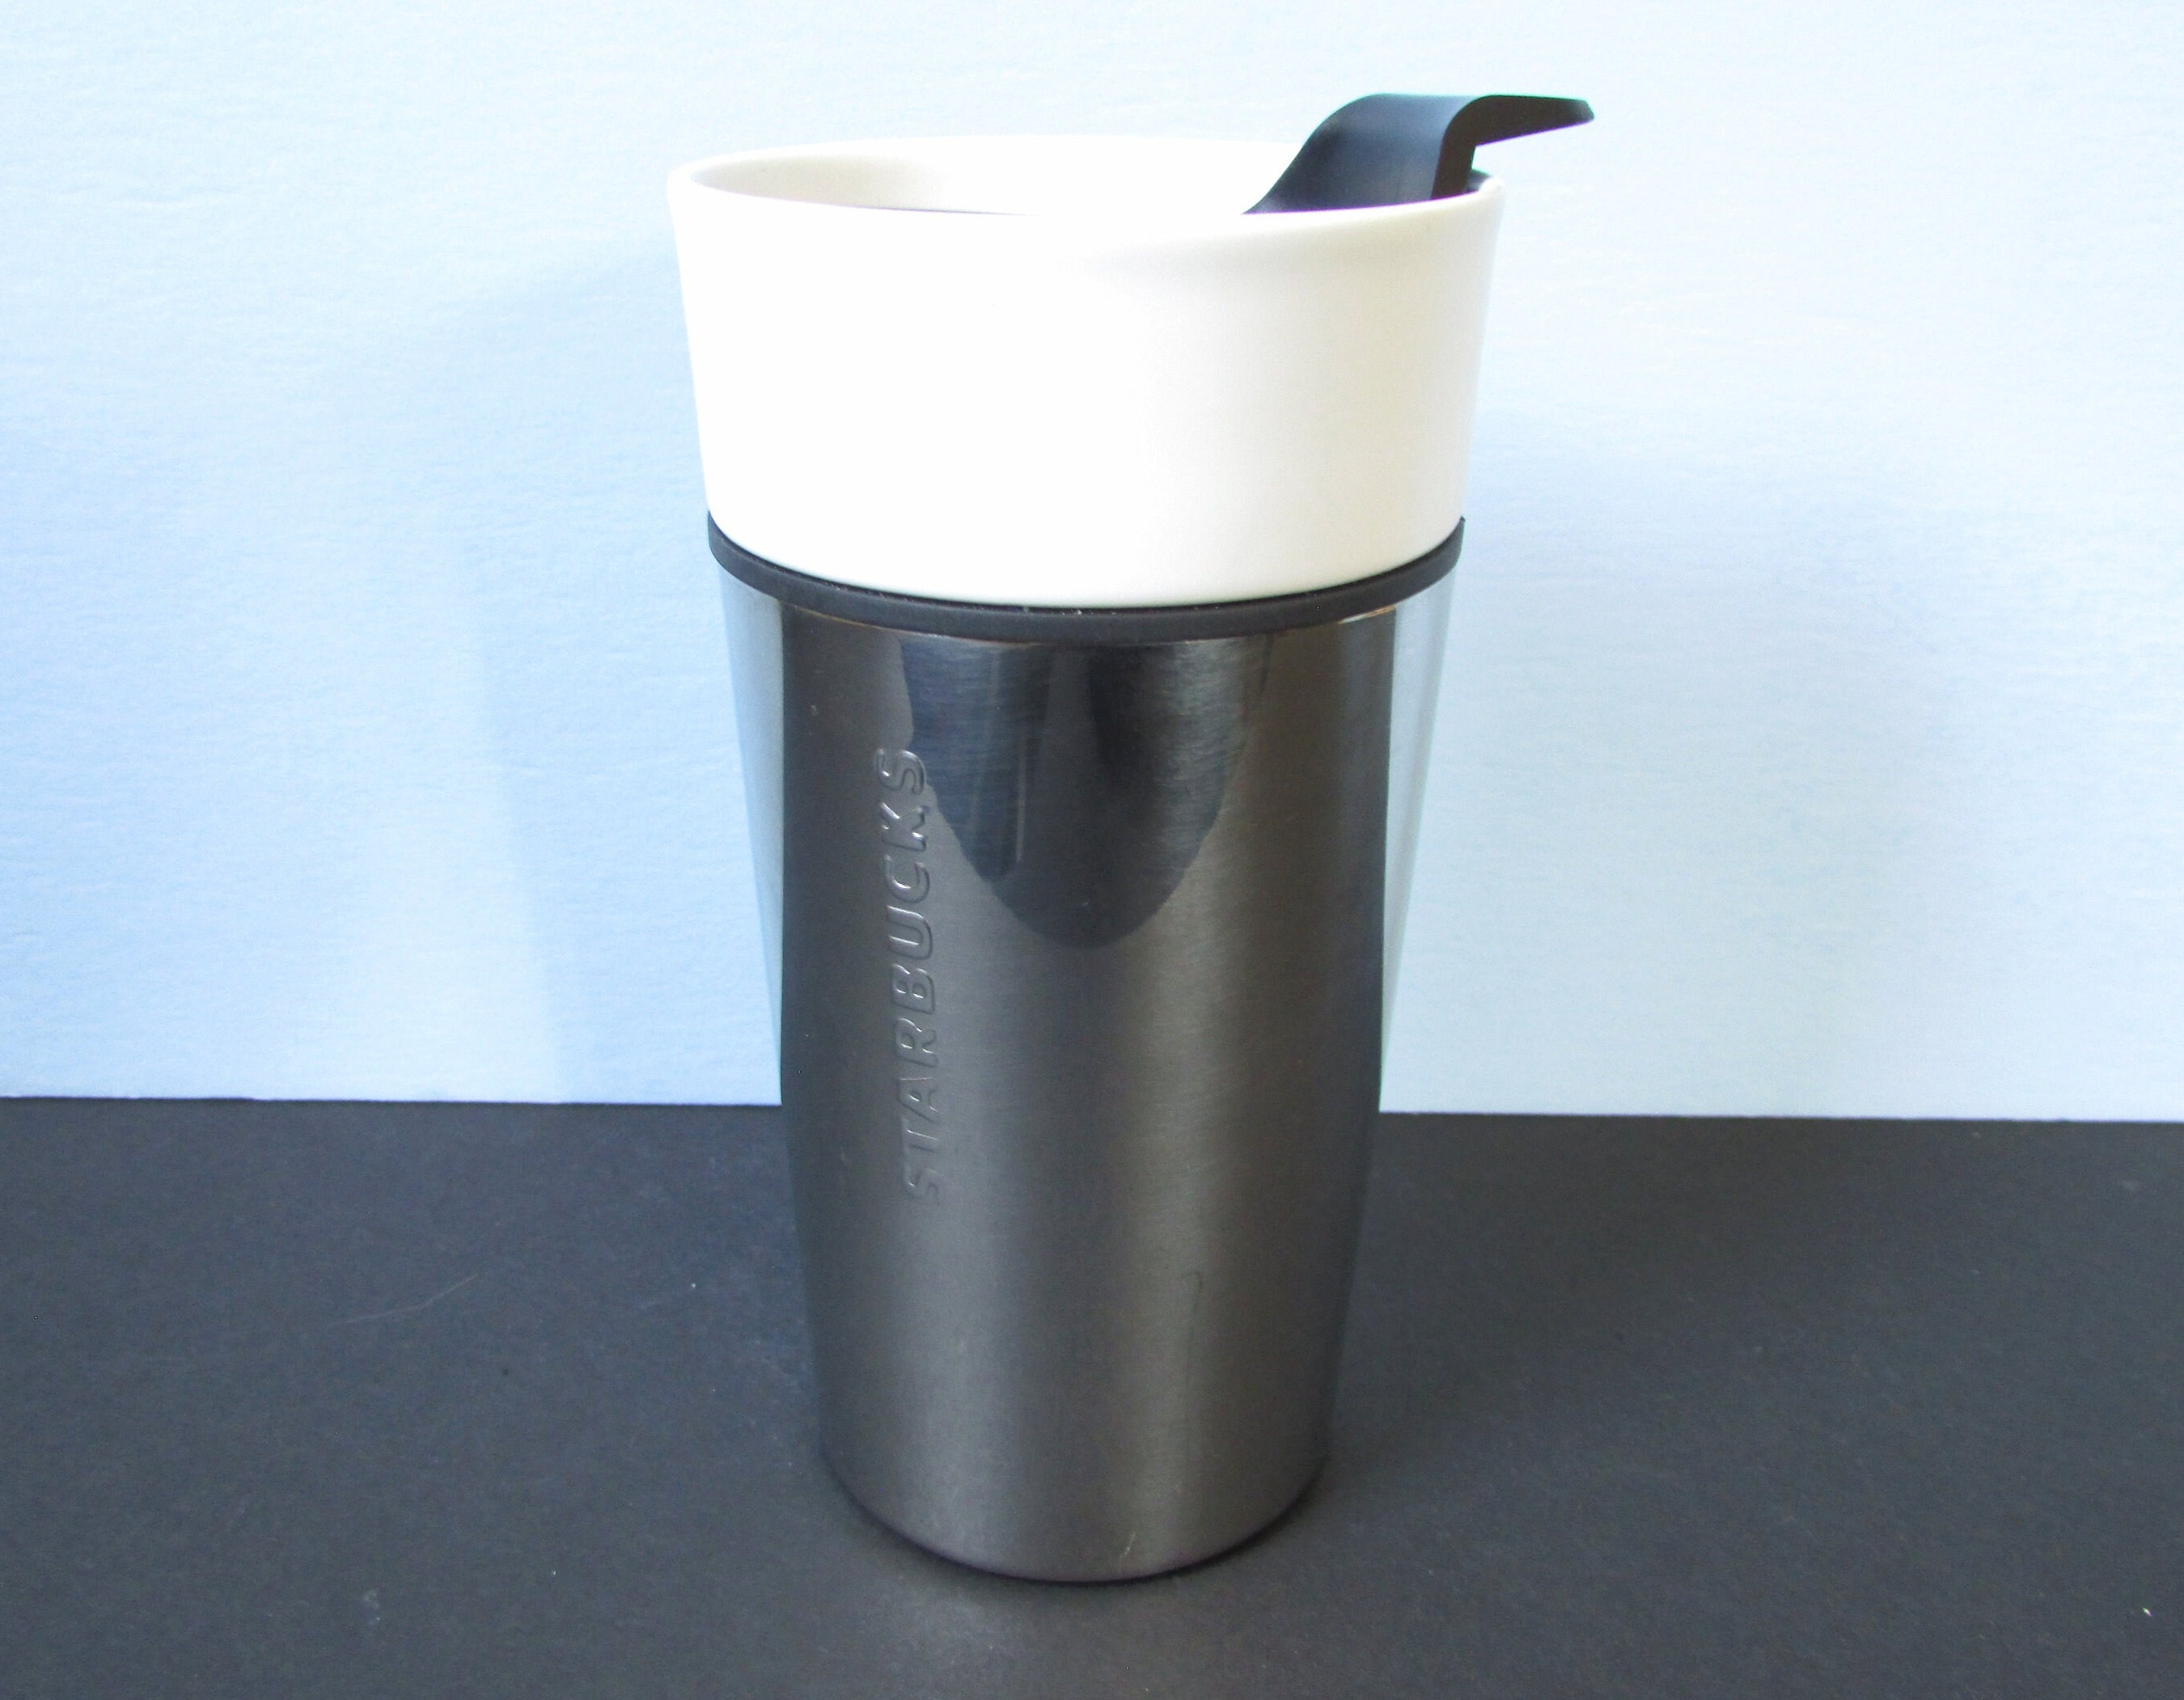 Starbucks 14 Oz Travel Mug 2004 Coffee Cup Tumbler Ceramic & Stainless Steel